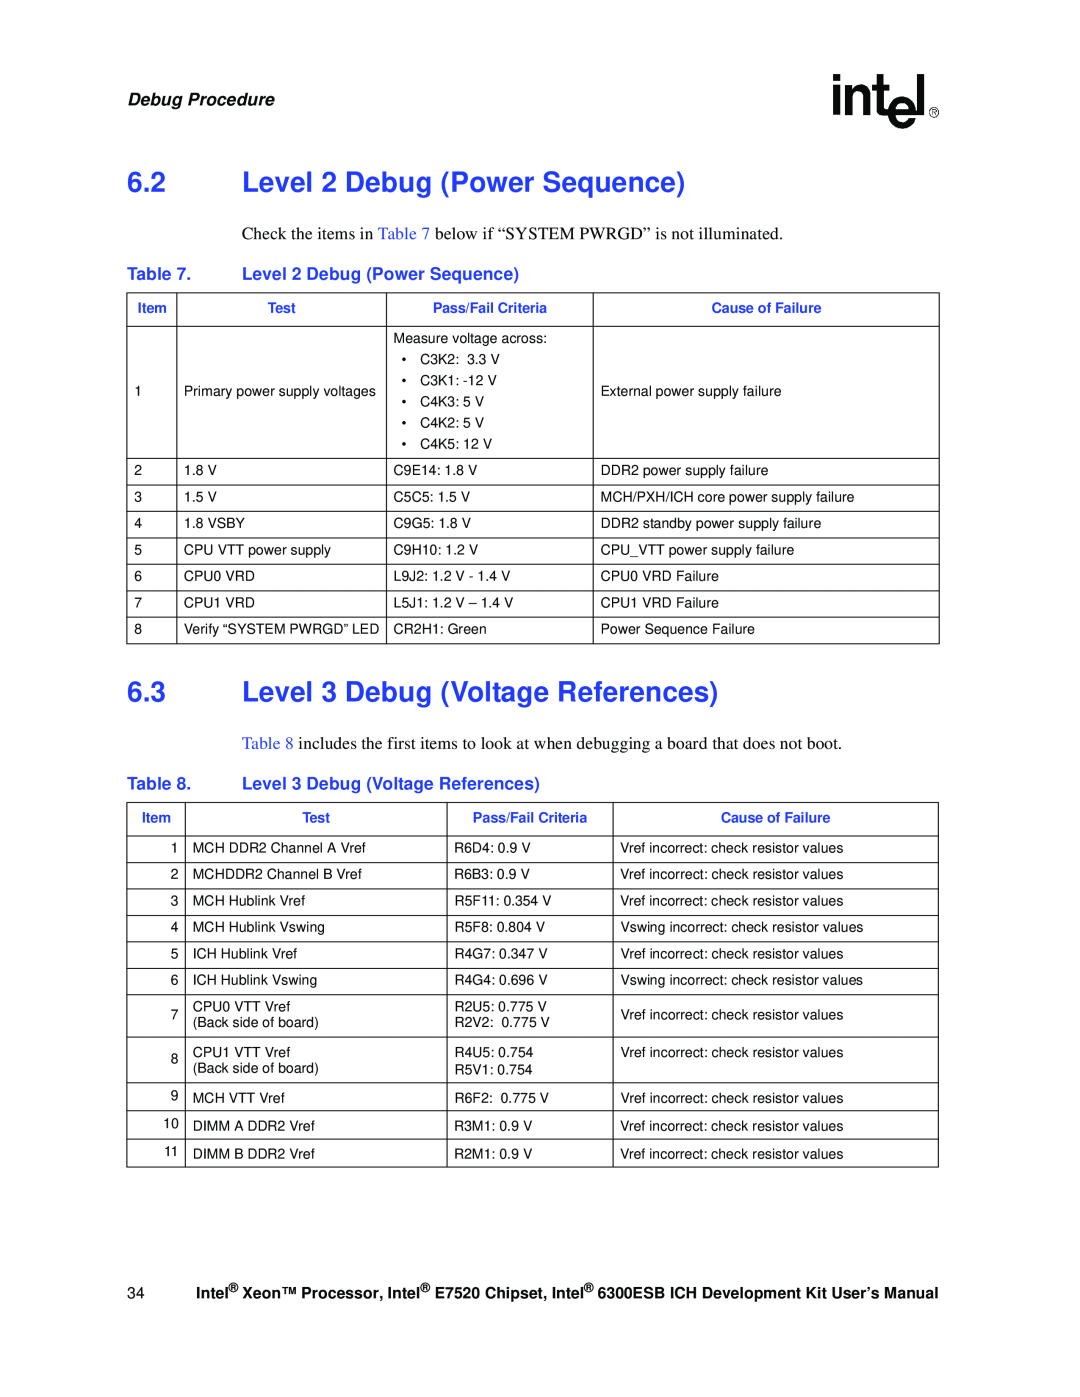 Intel Xeon Level 2 Debug Power Sequence, Level 3 Debug Voltage References, Debug Procedure, Test, Pass/Fail Criteria 